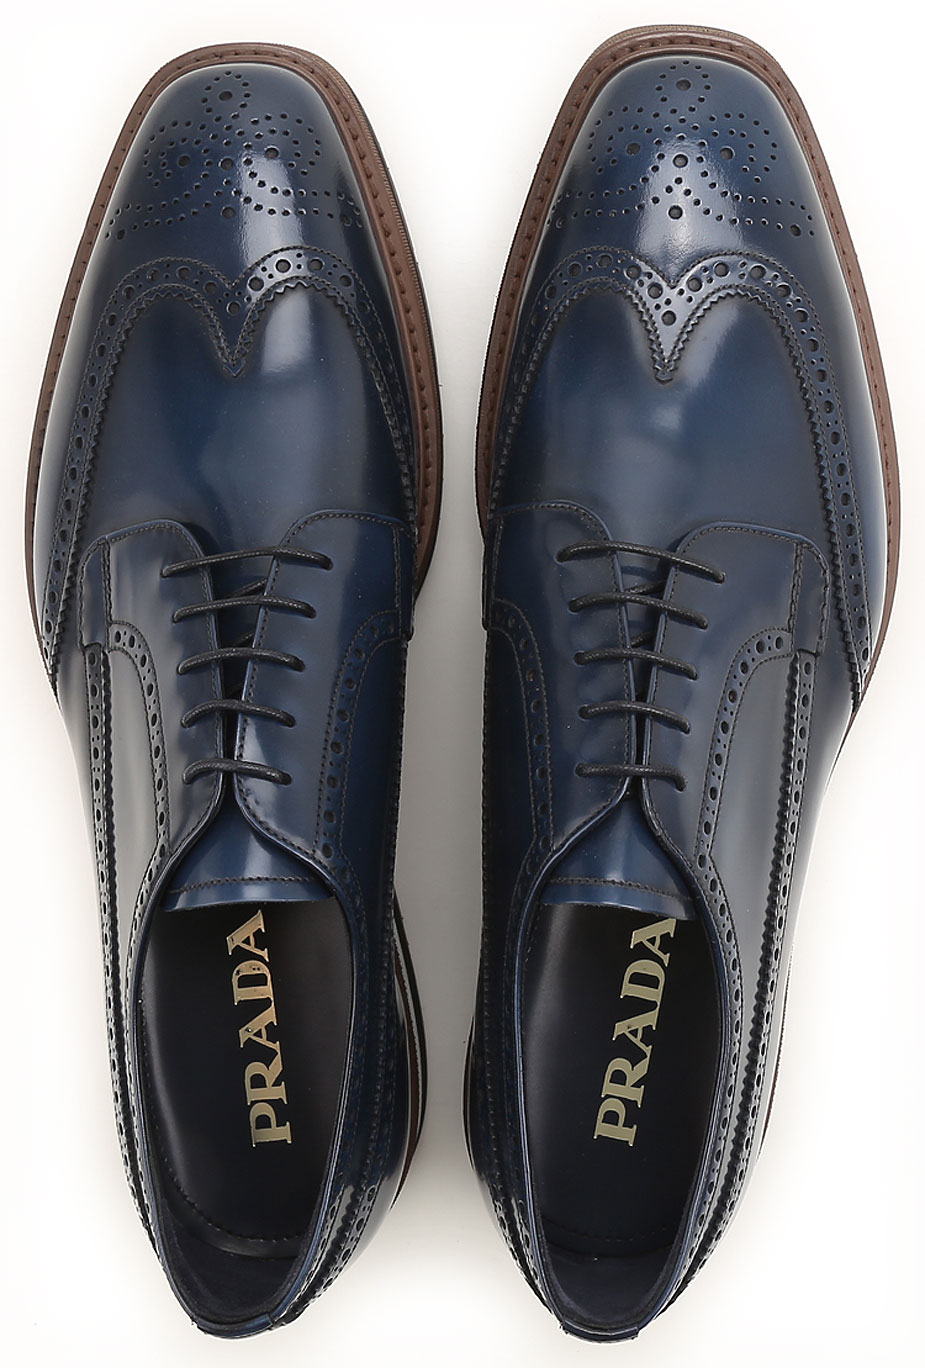 Mens Shoes Prada, Style code: 2eg015-055-f0fd4